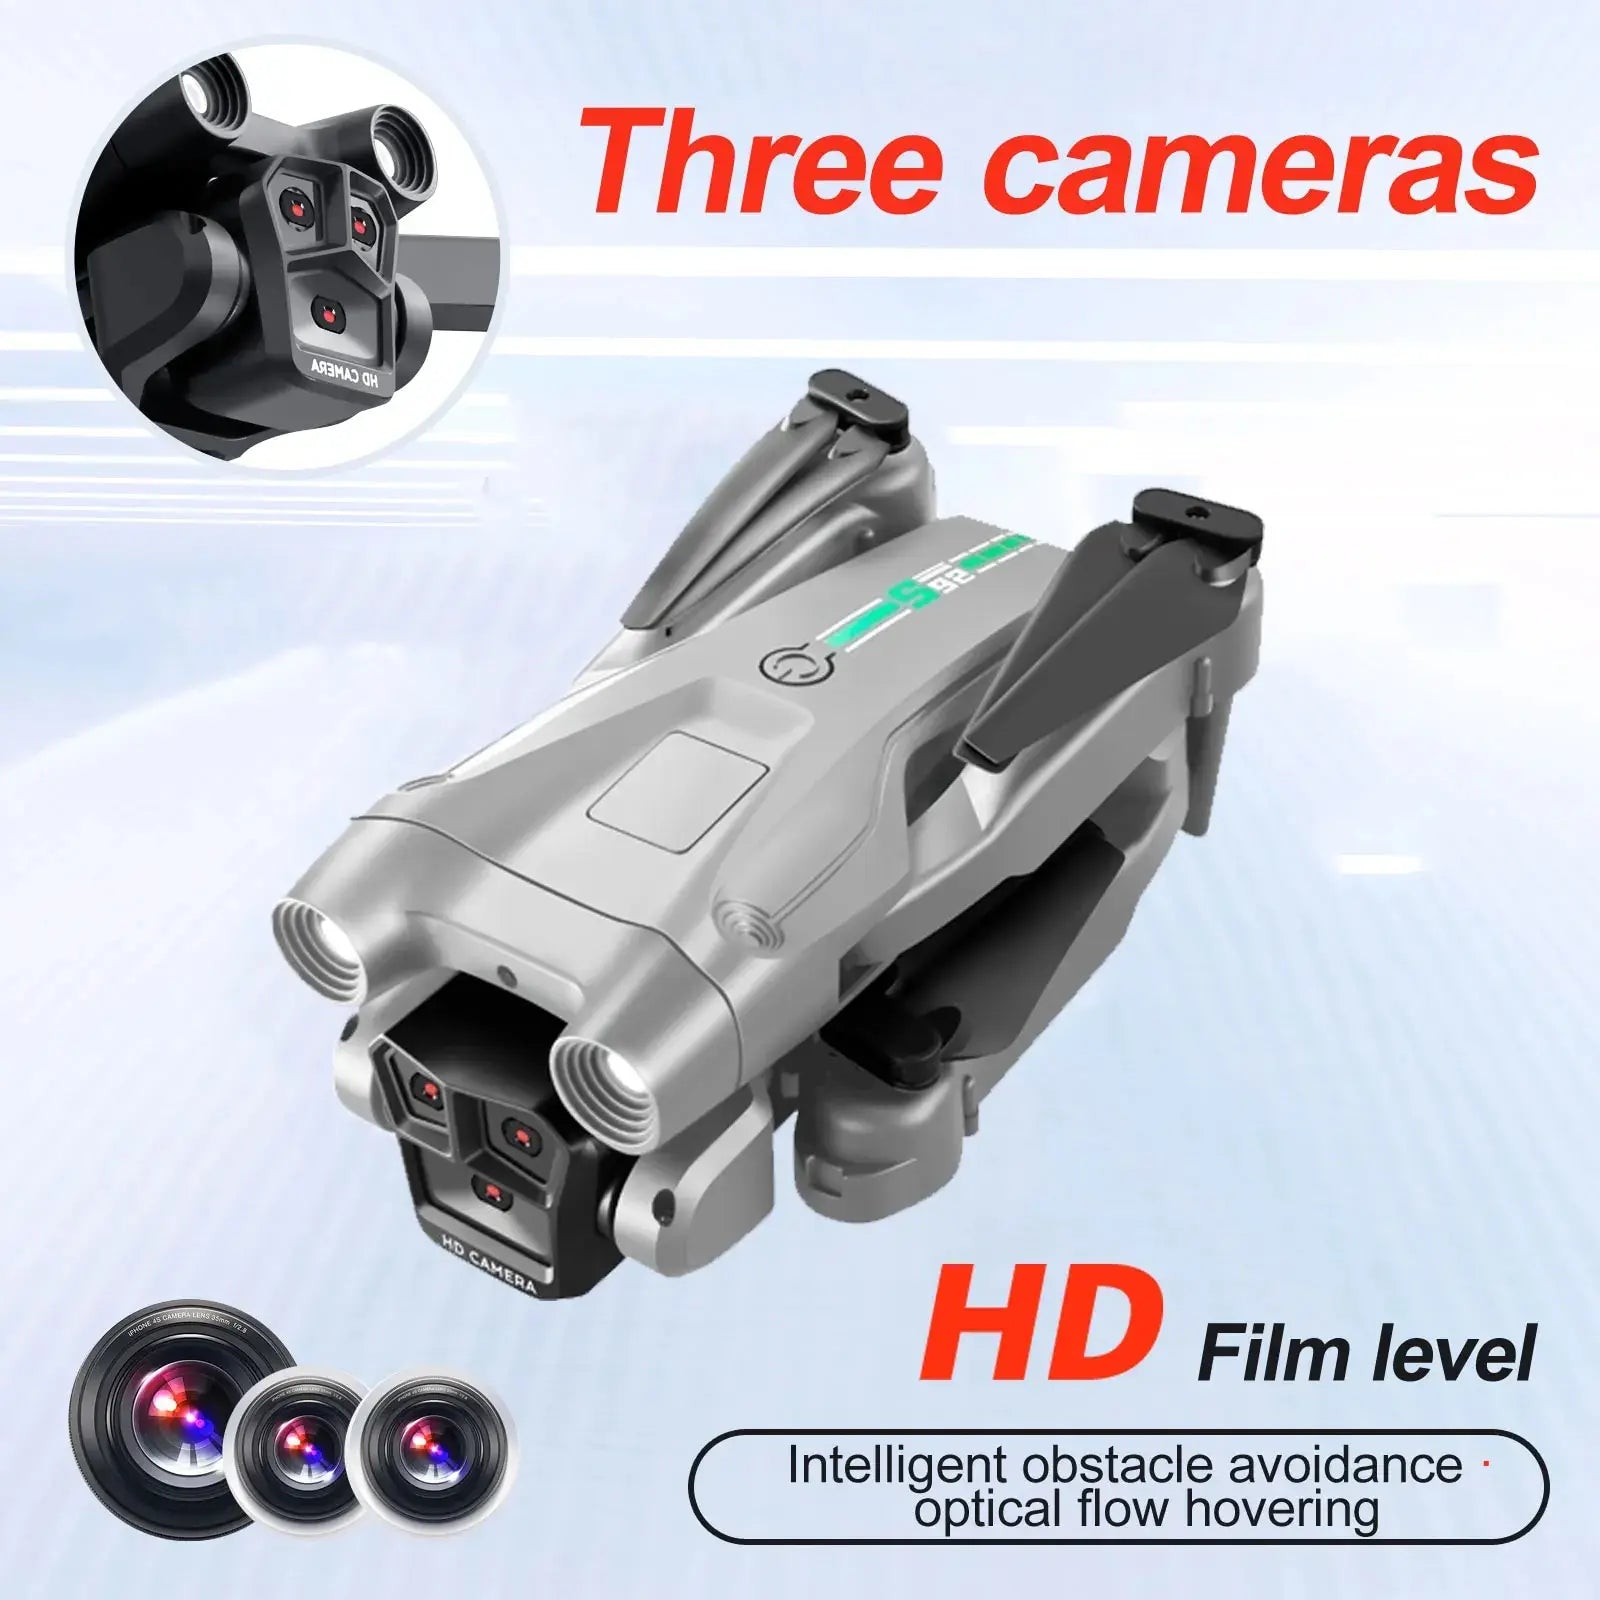 S92 HD Drone: High Grip, Foldable, Mini RC, WiFi, Aerial Photography  petlums.com   